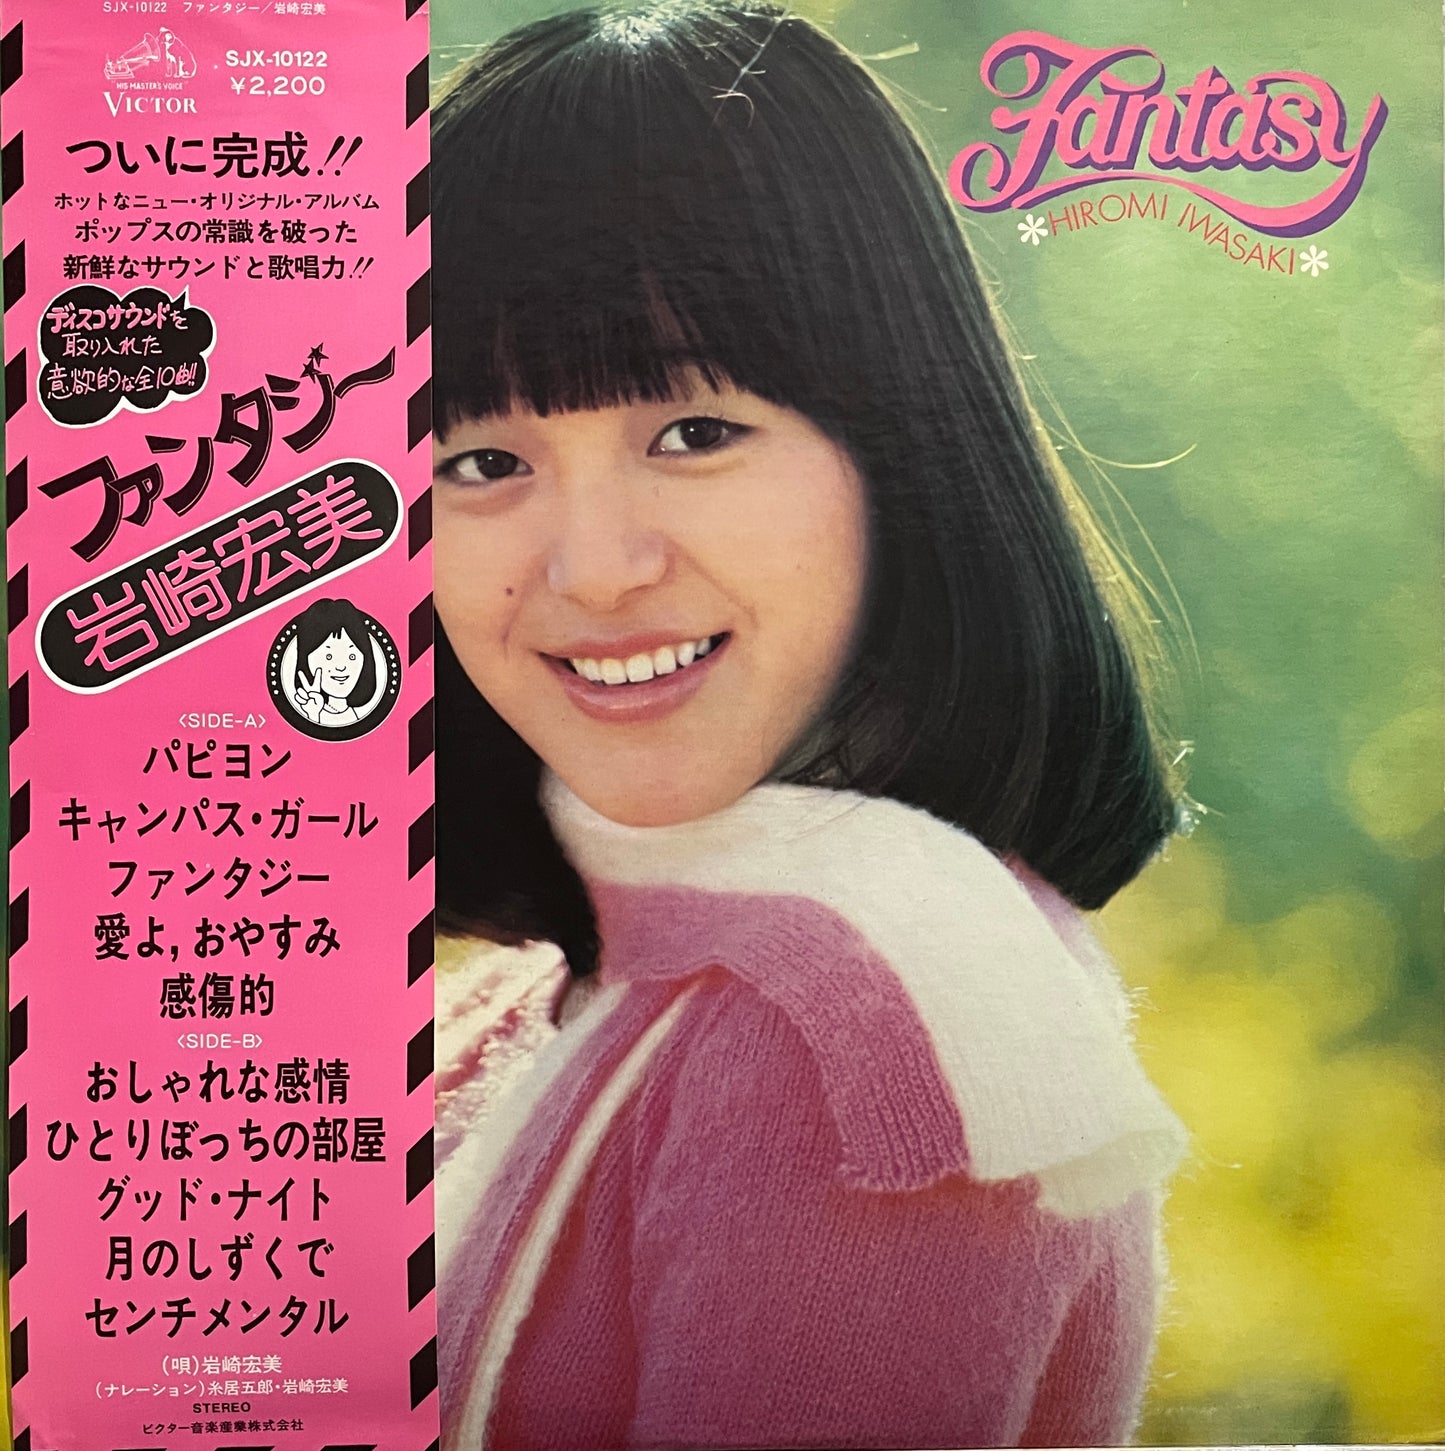 Hiromi Iwasaki "Fantasy" (1976)